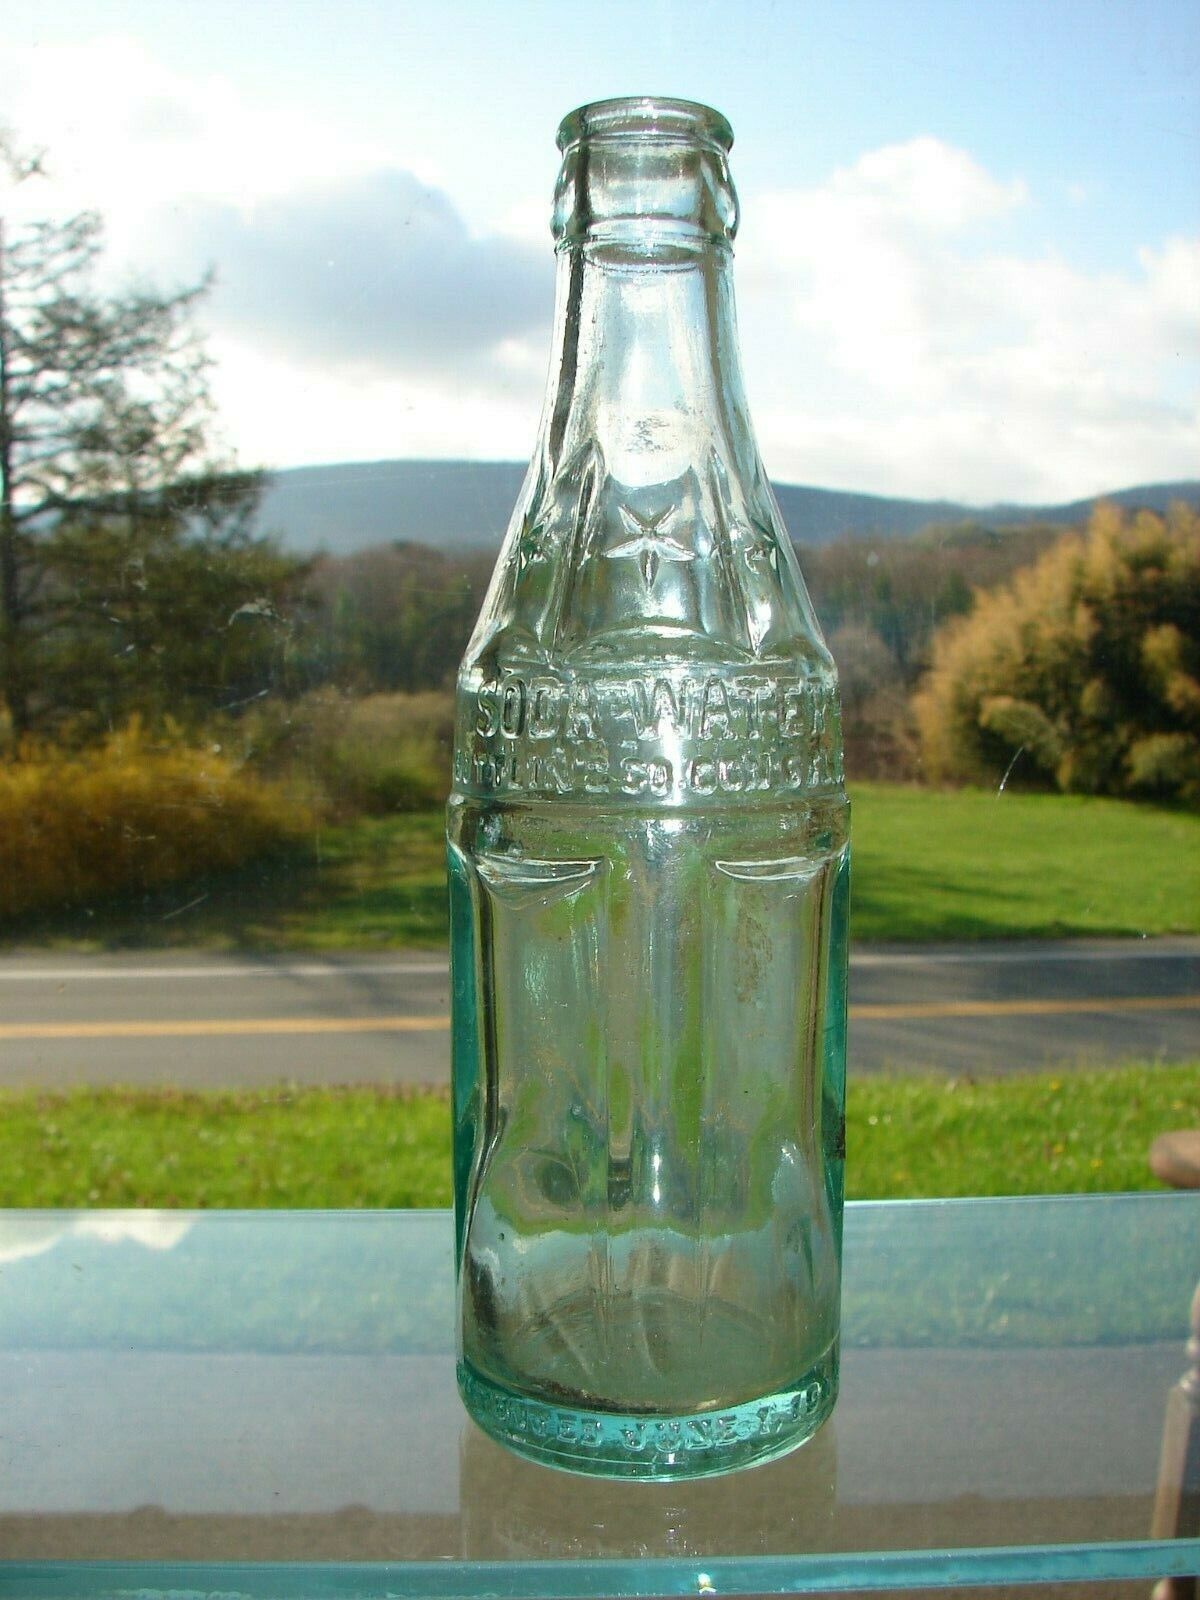 Soda Water Property of Coca-Cola - Pottsville, Pa Art Deco Soda Bottle 1926